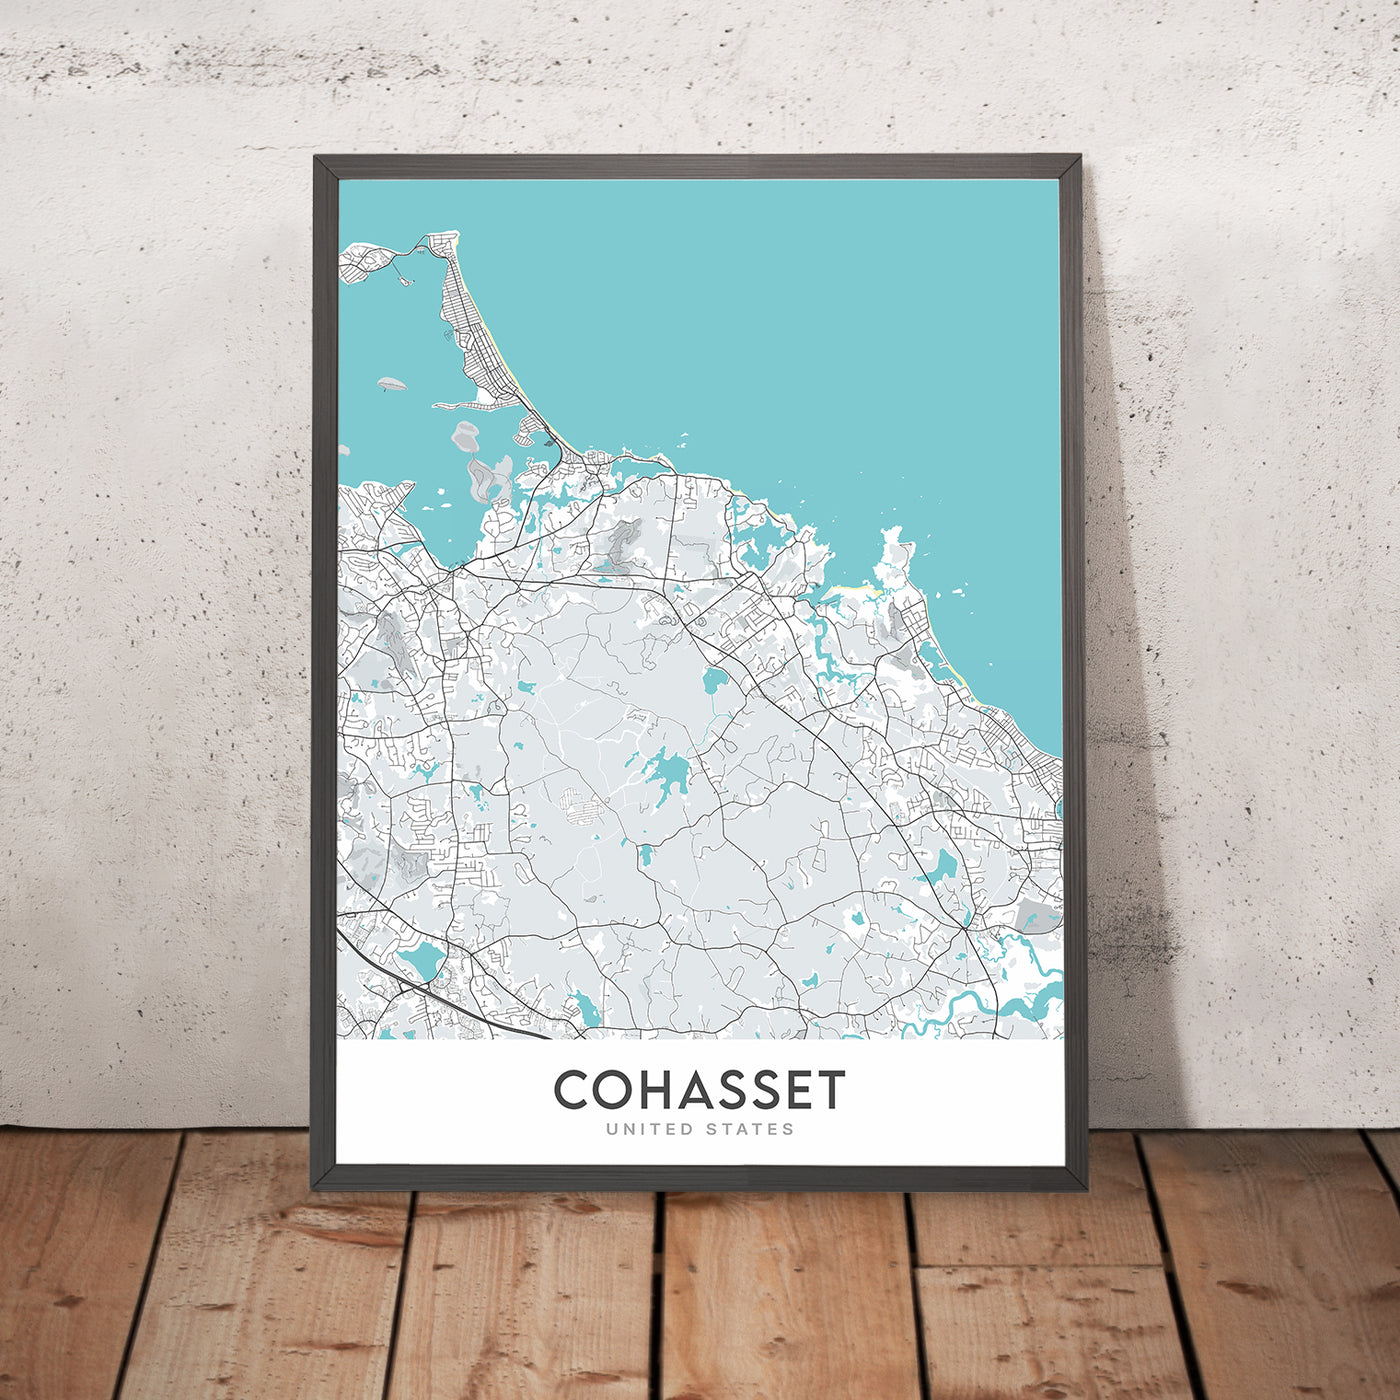 Mapa moderno de la ciudad de Cohasset, MA: Cohasset Village, Sandy Cove, Jerusalem Road, King Street, North Main Street